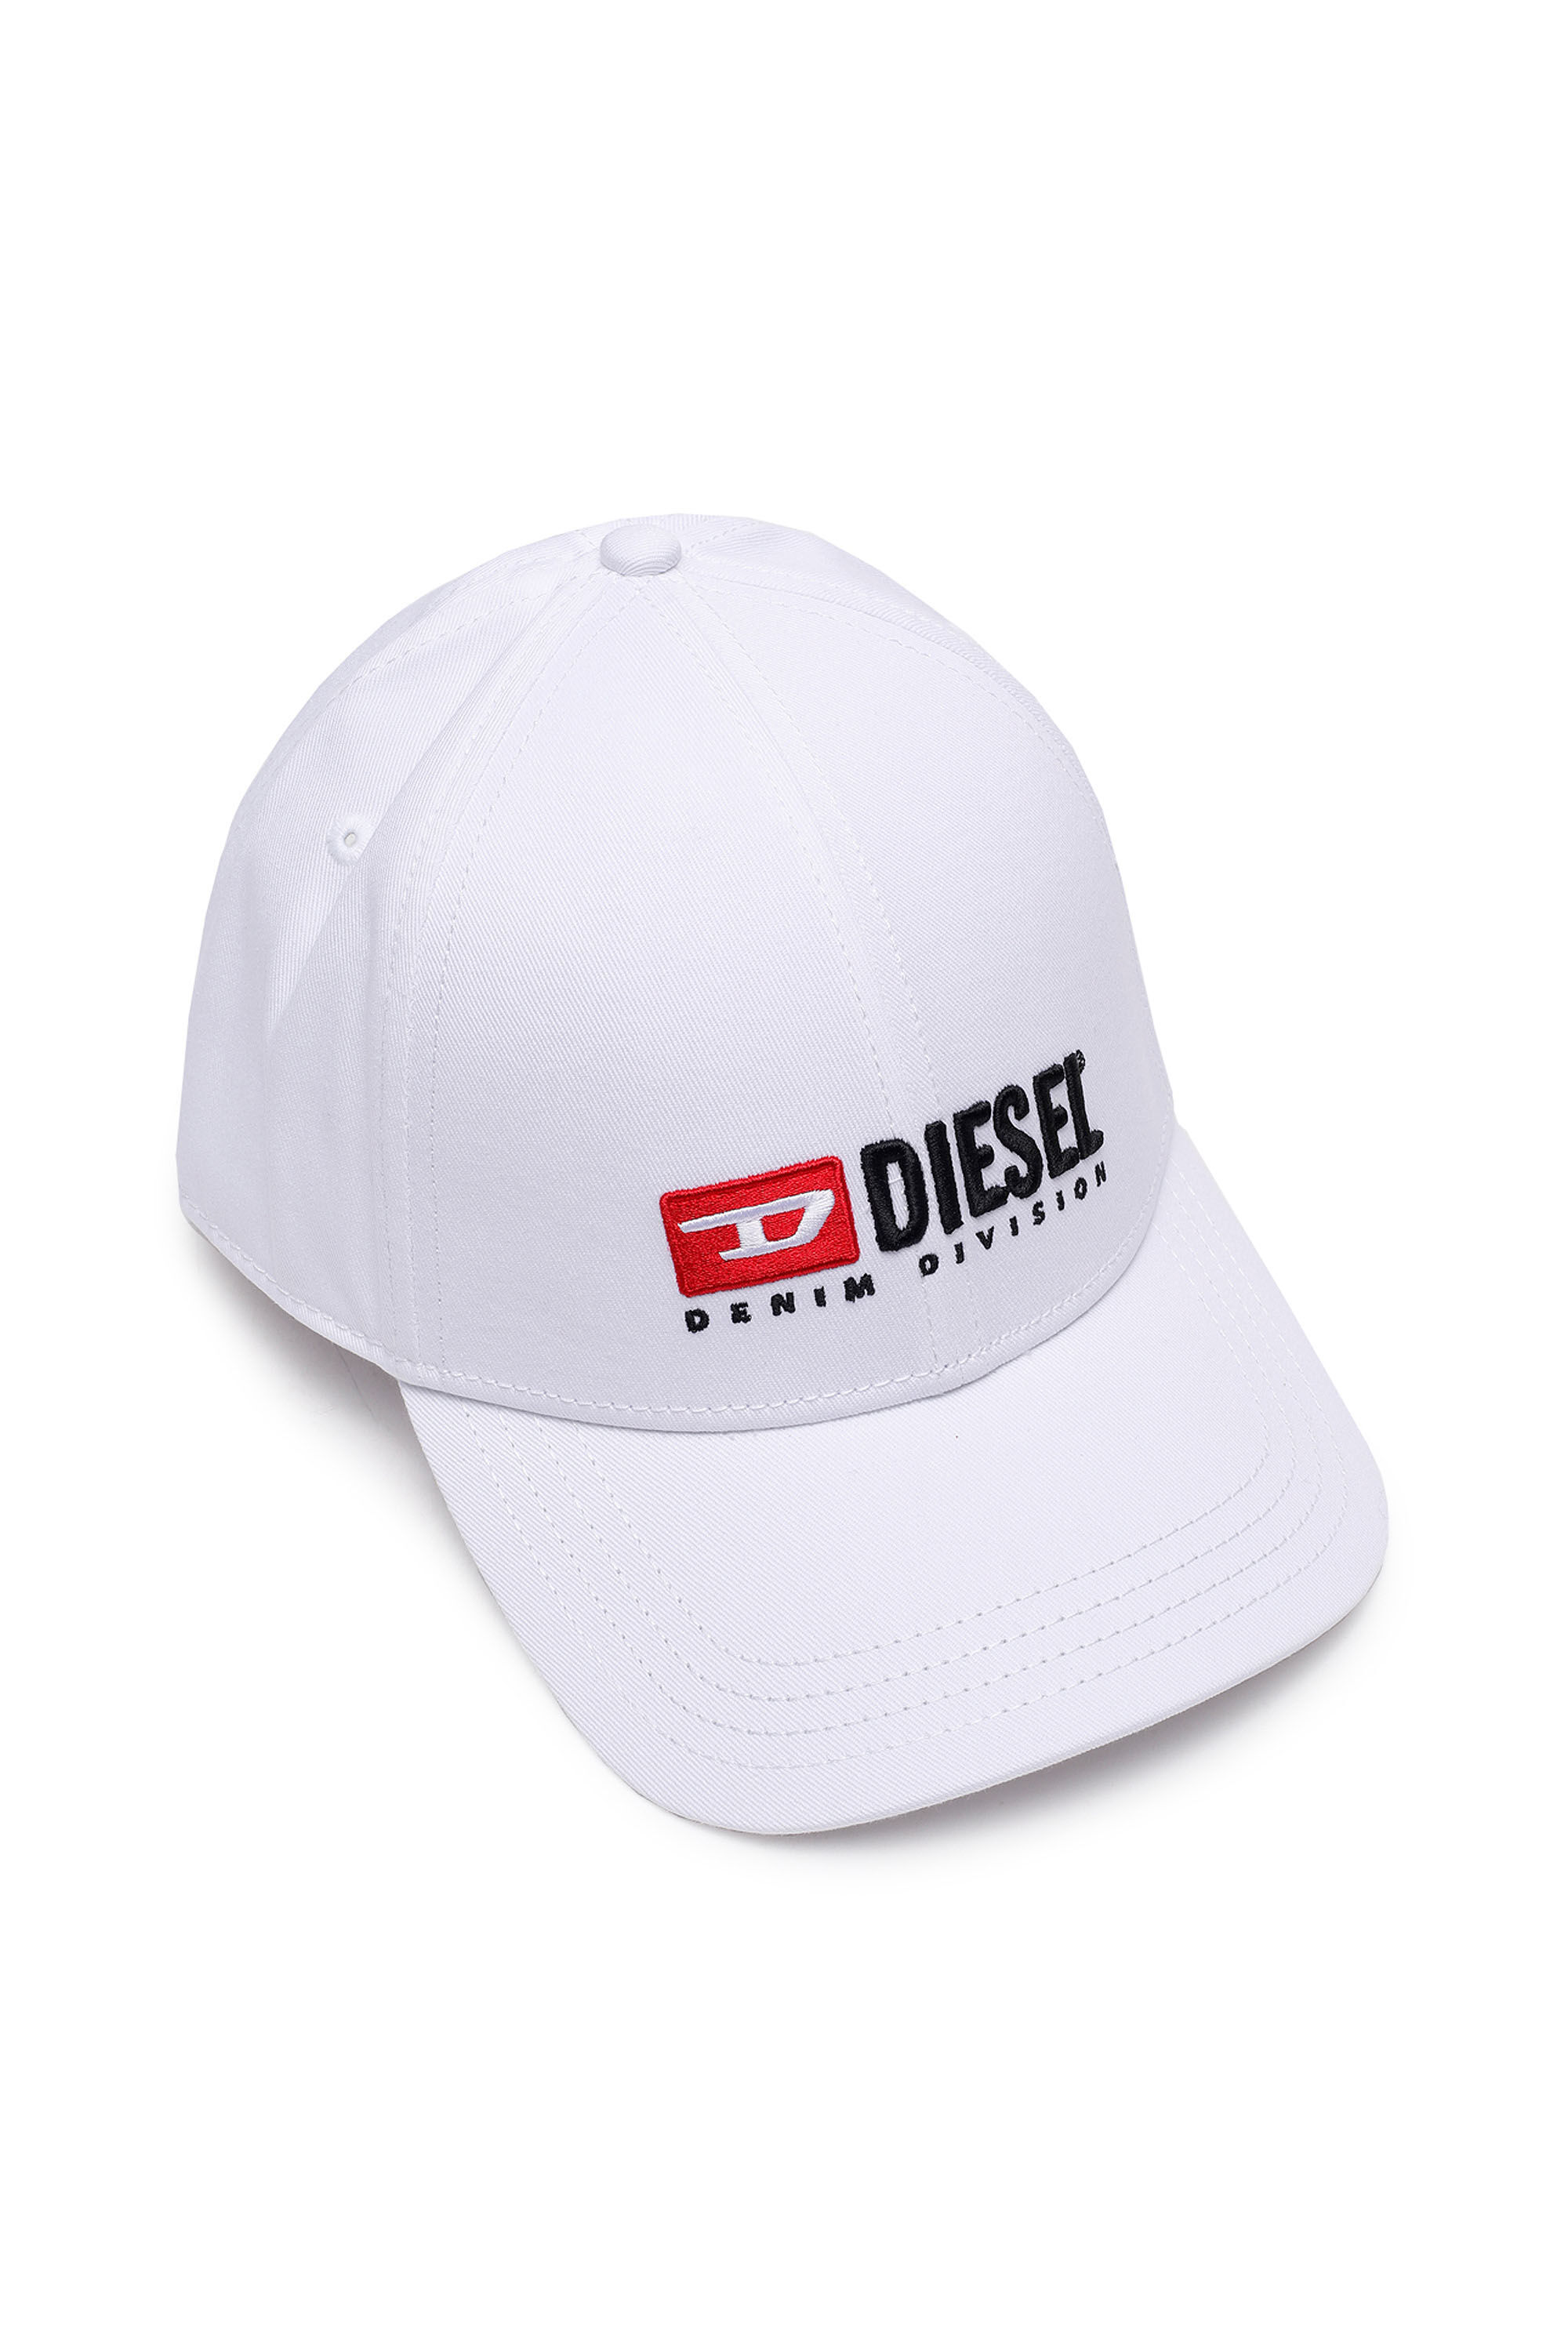 Diesel - CORRY-DIV,  - Image 3